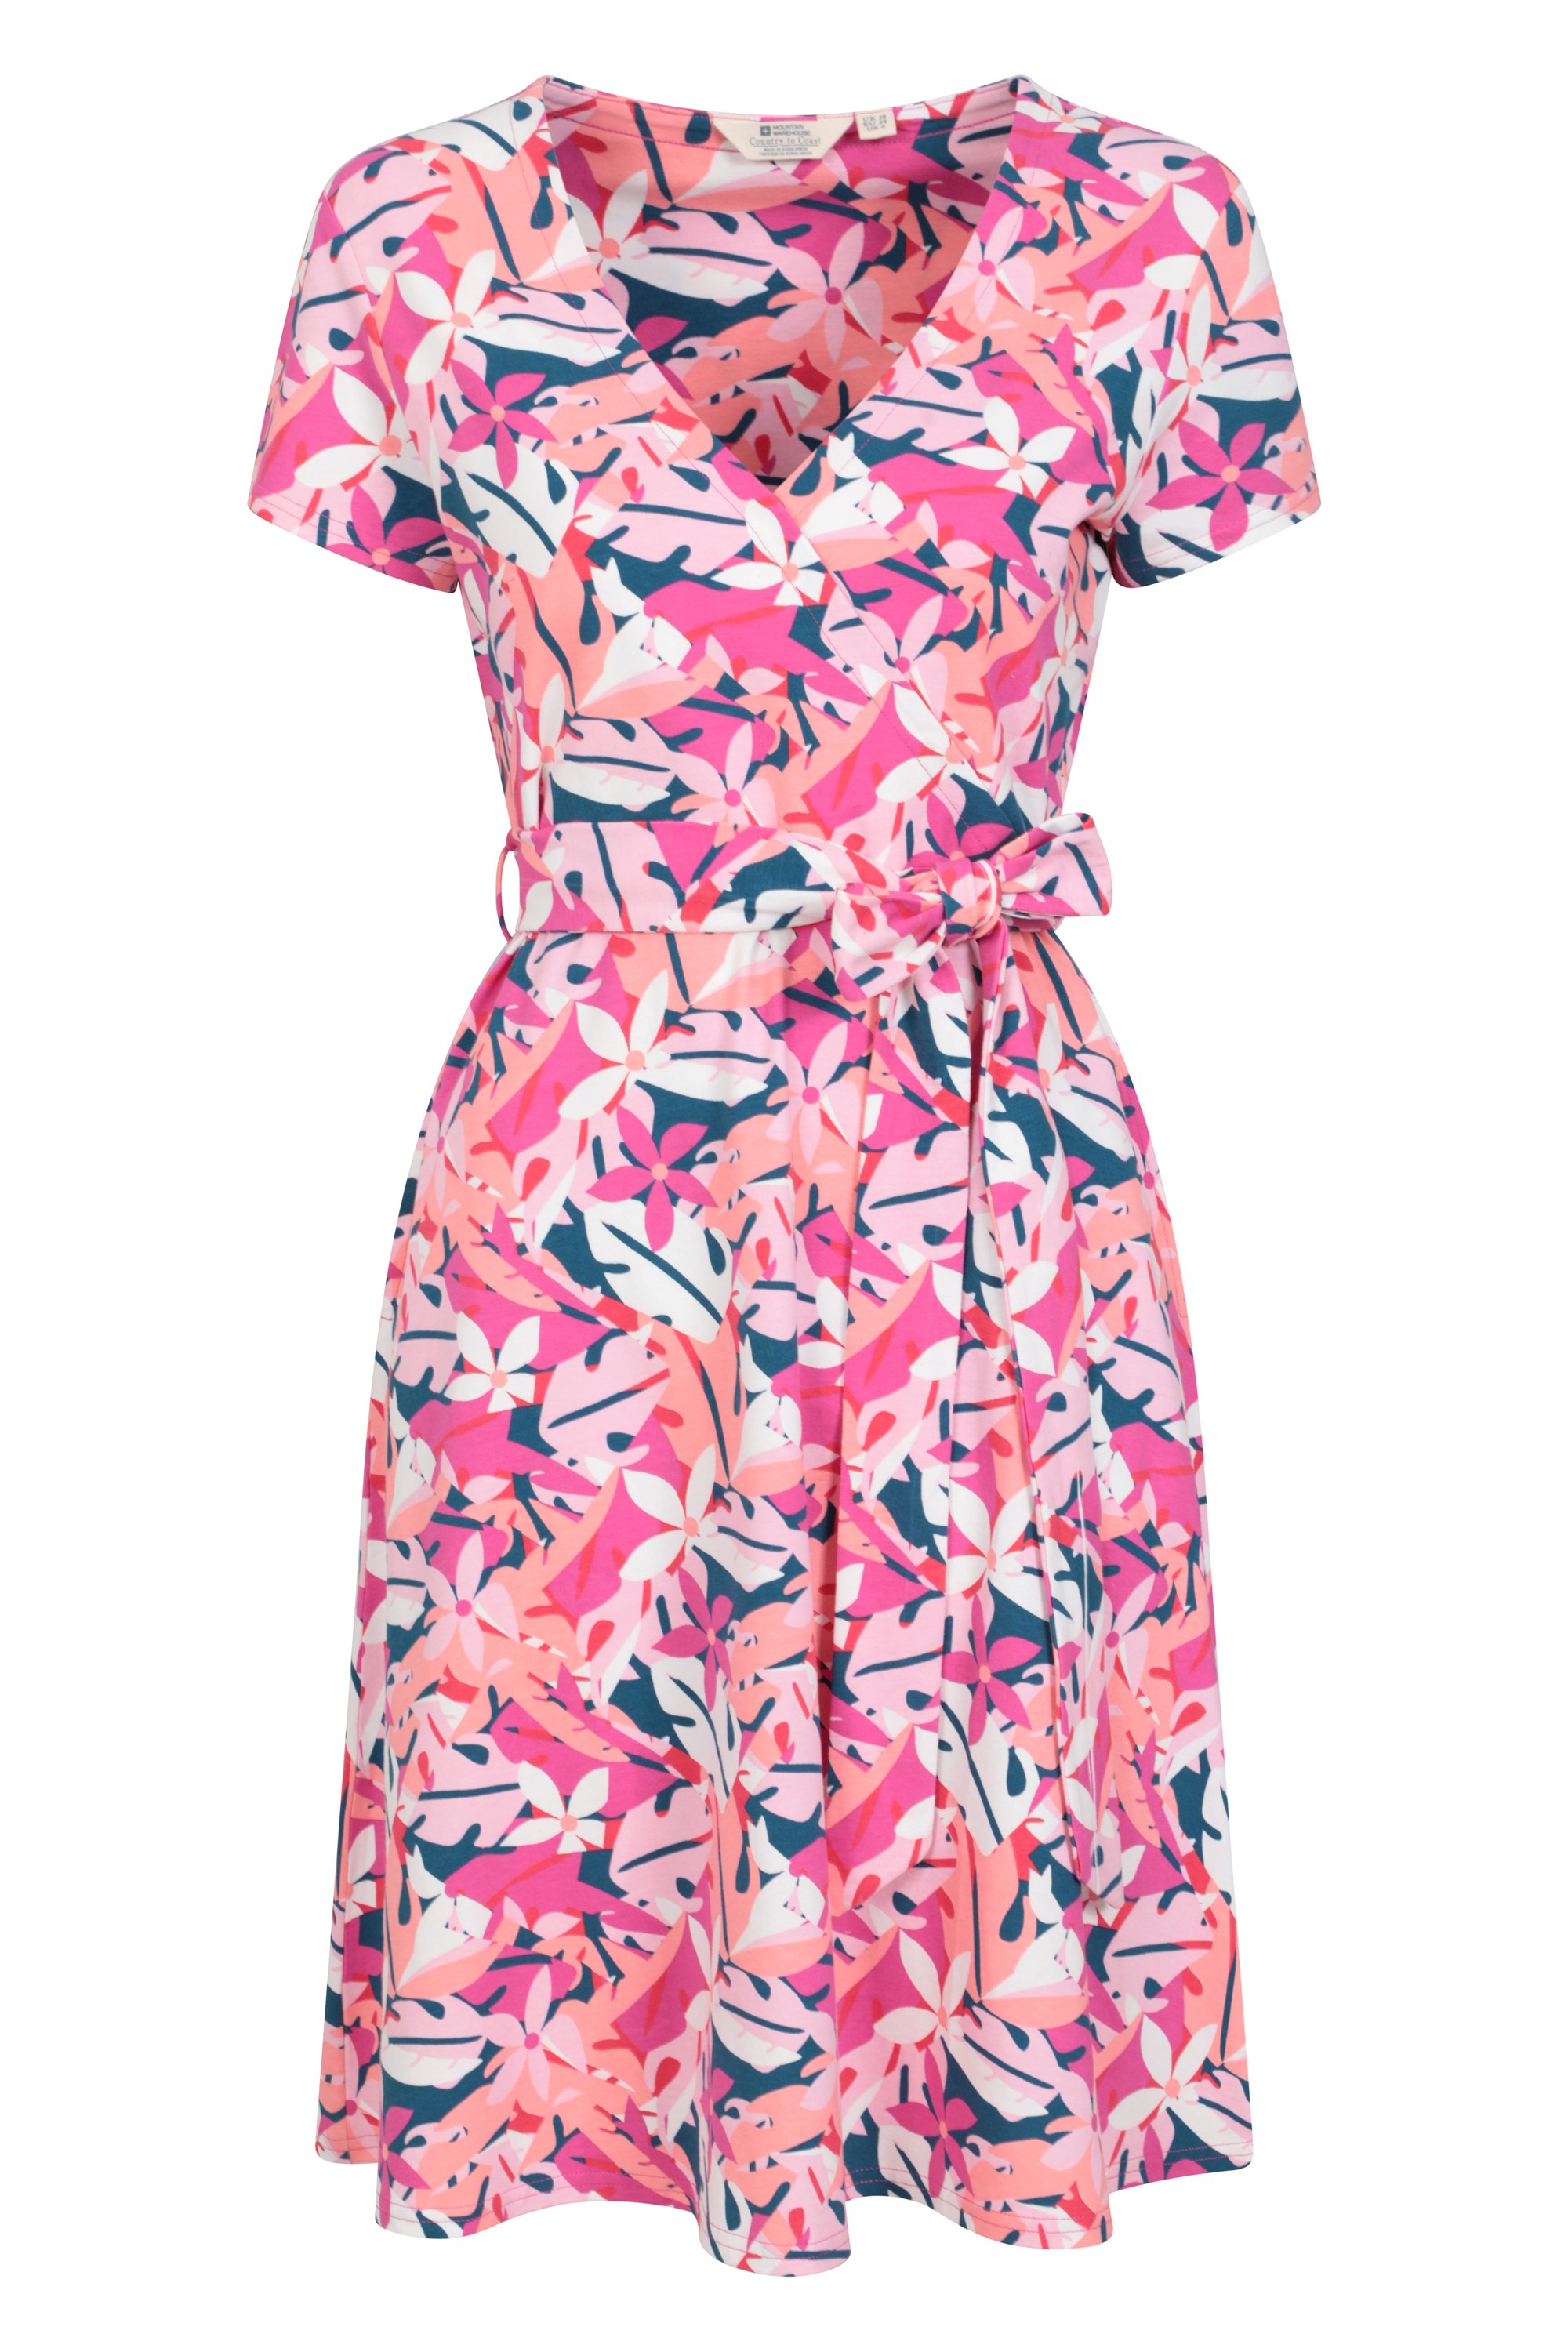 Santorini Womens UV Jersey Wrap Dress - Bright Pink